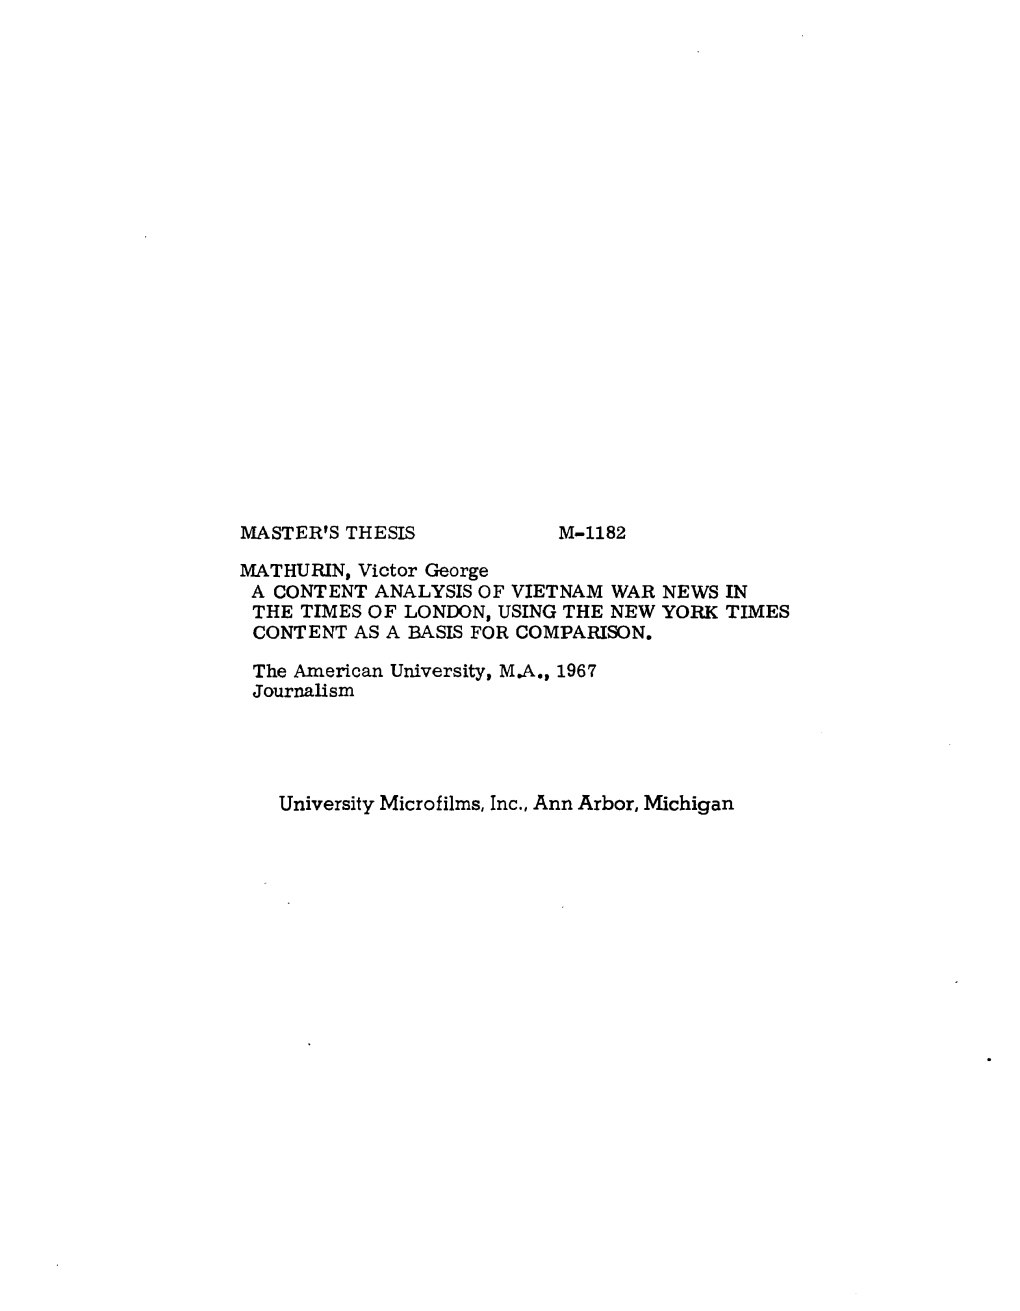 University Microfilms, Inc., Ann Arbor, Michigan a Coiitbu AUALISIS of VIETNAM WAR NEWS in the TIKES of Loimon